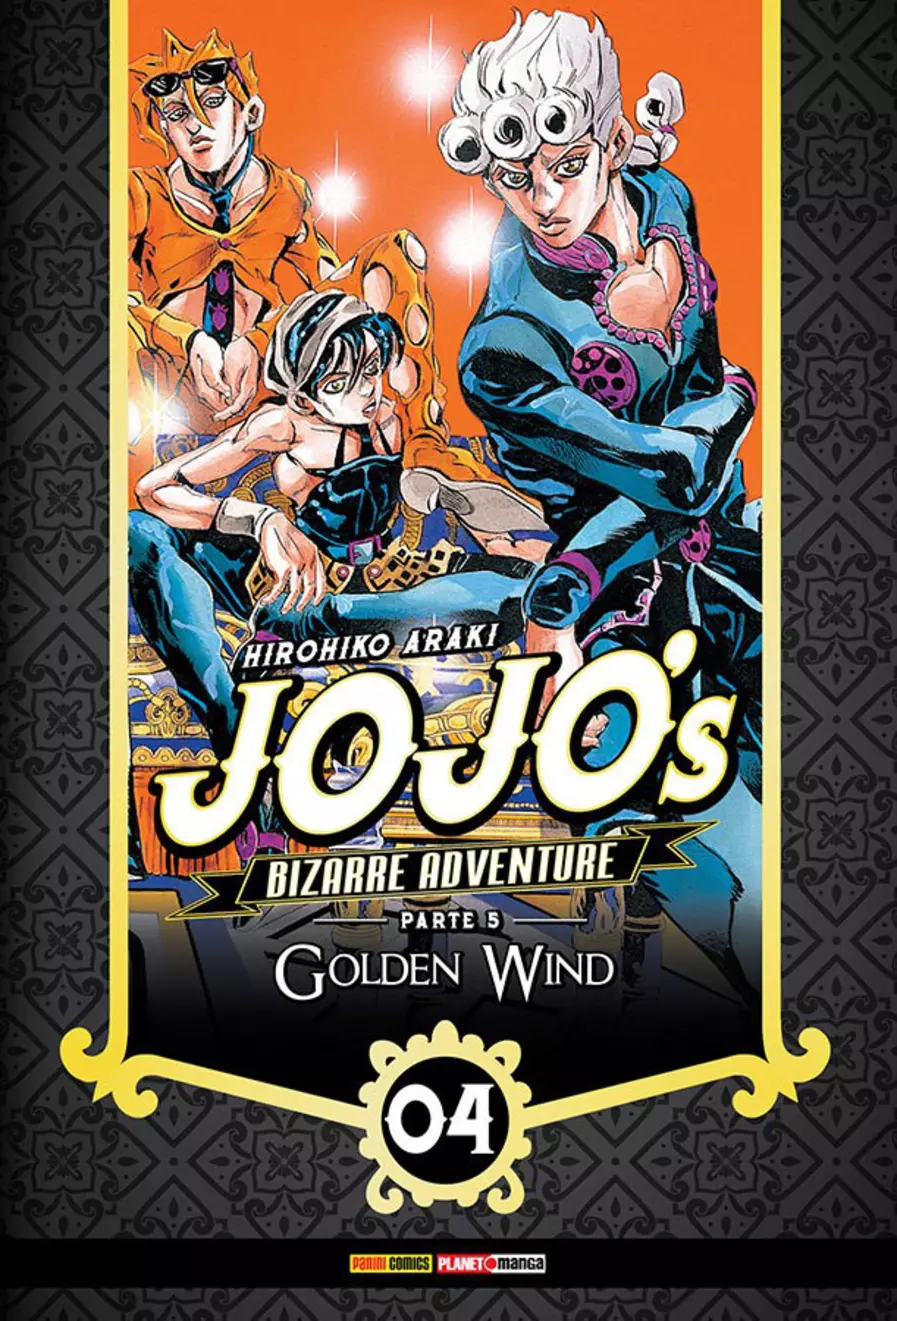 JoJo's Bizarre Adventure Part 5: Golden Wind Manga